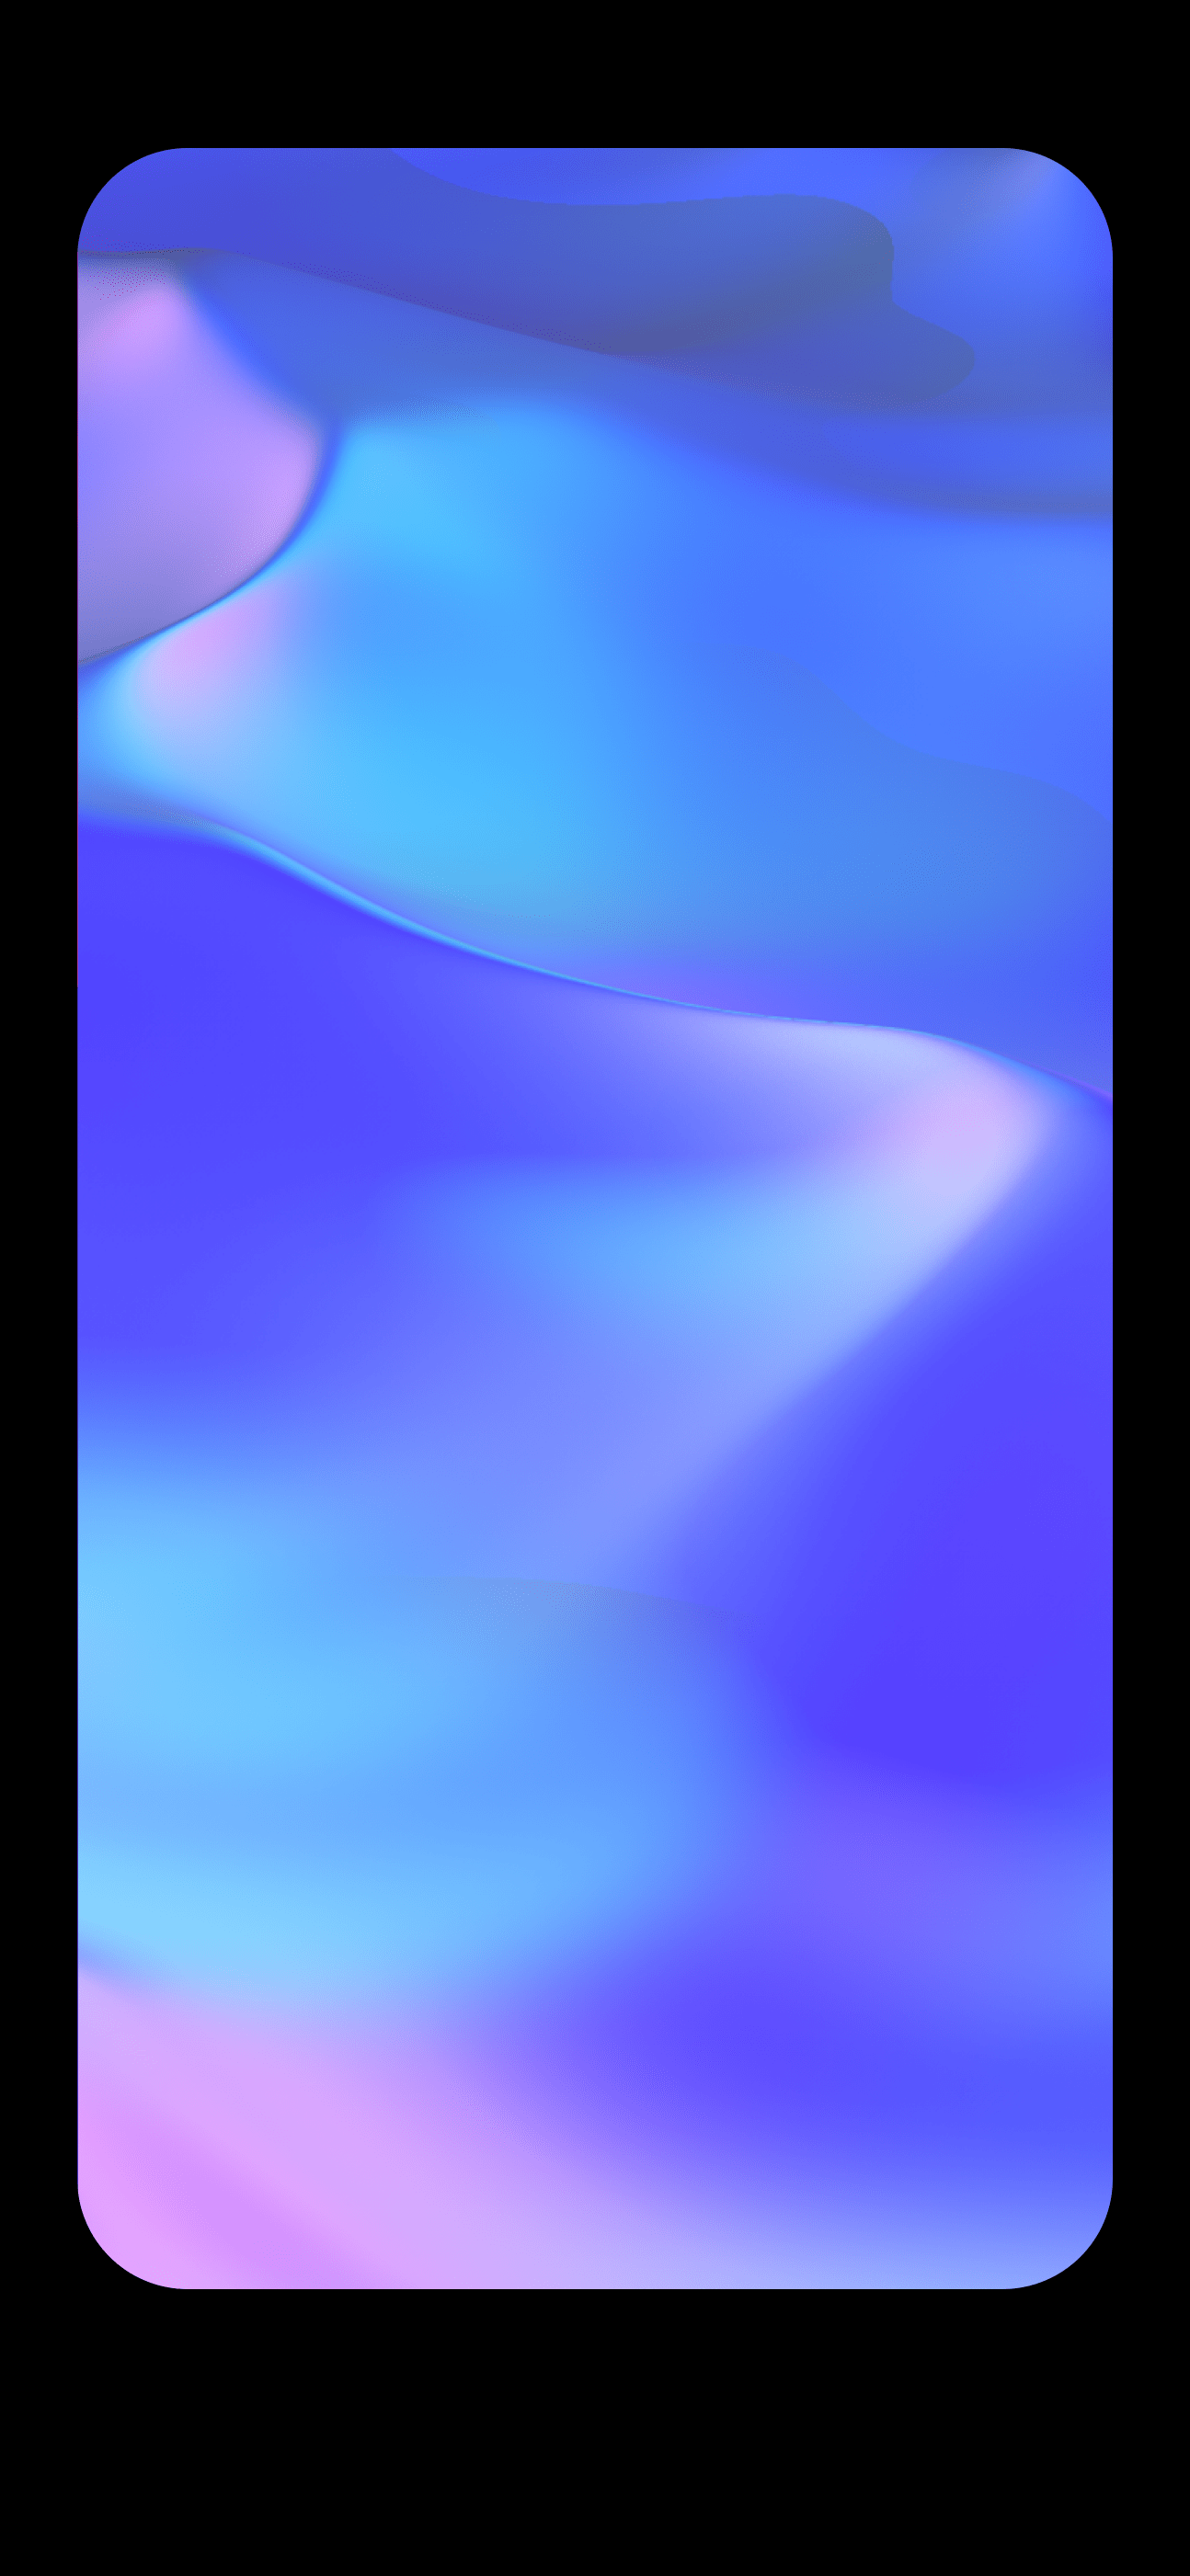 Iphone X Notch Wallpaper Full Hd